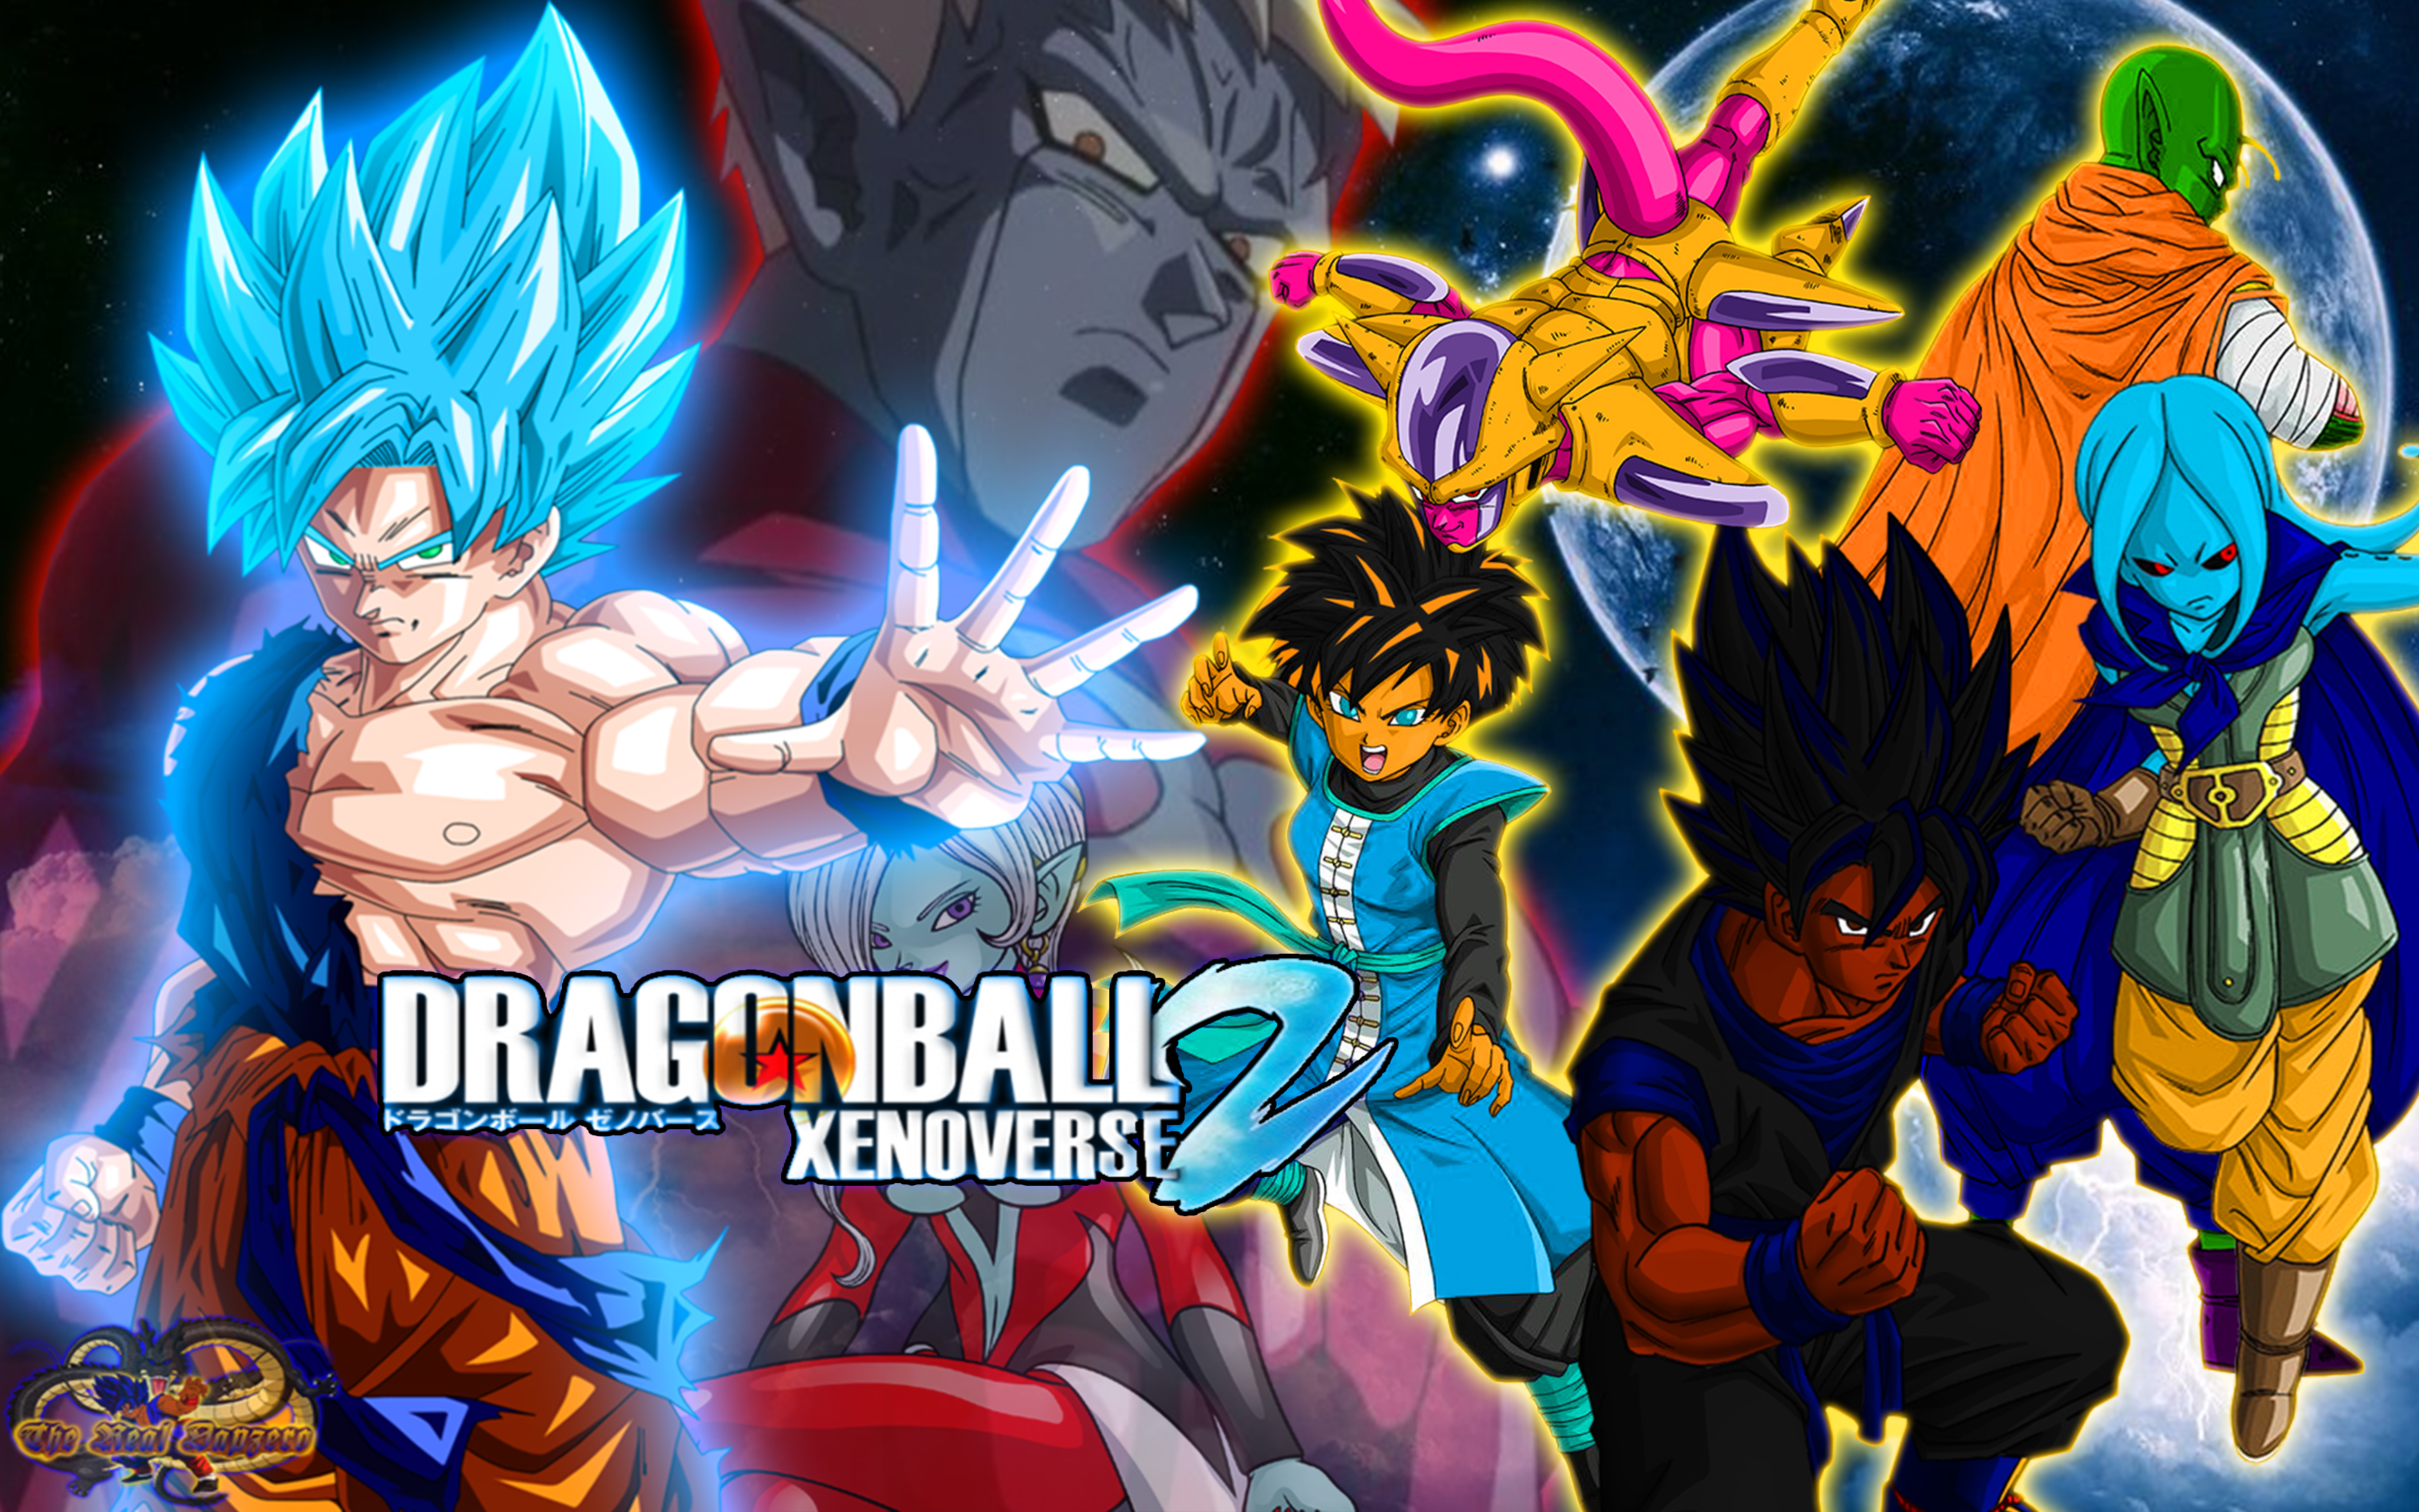 Dragon Ball Xenoverse 3 Game Cover Design by Dragolist on DeviantArt